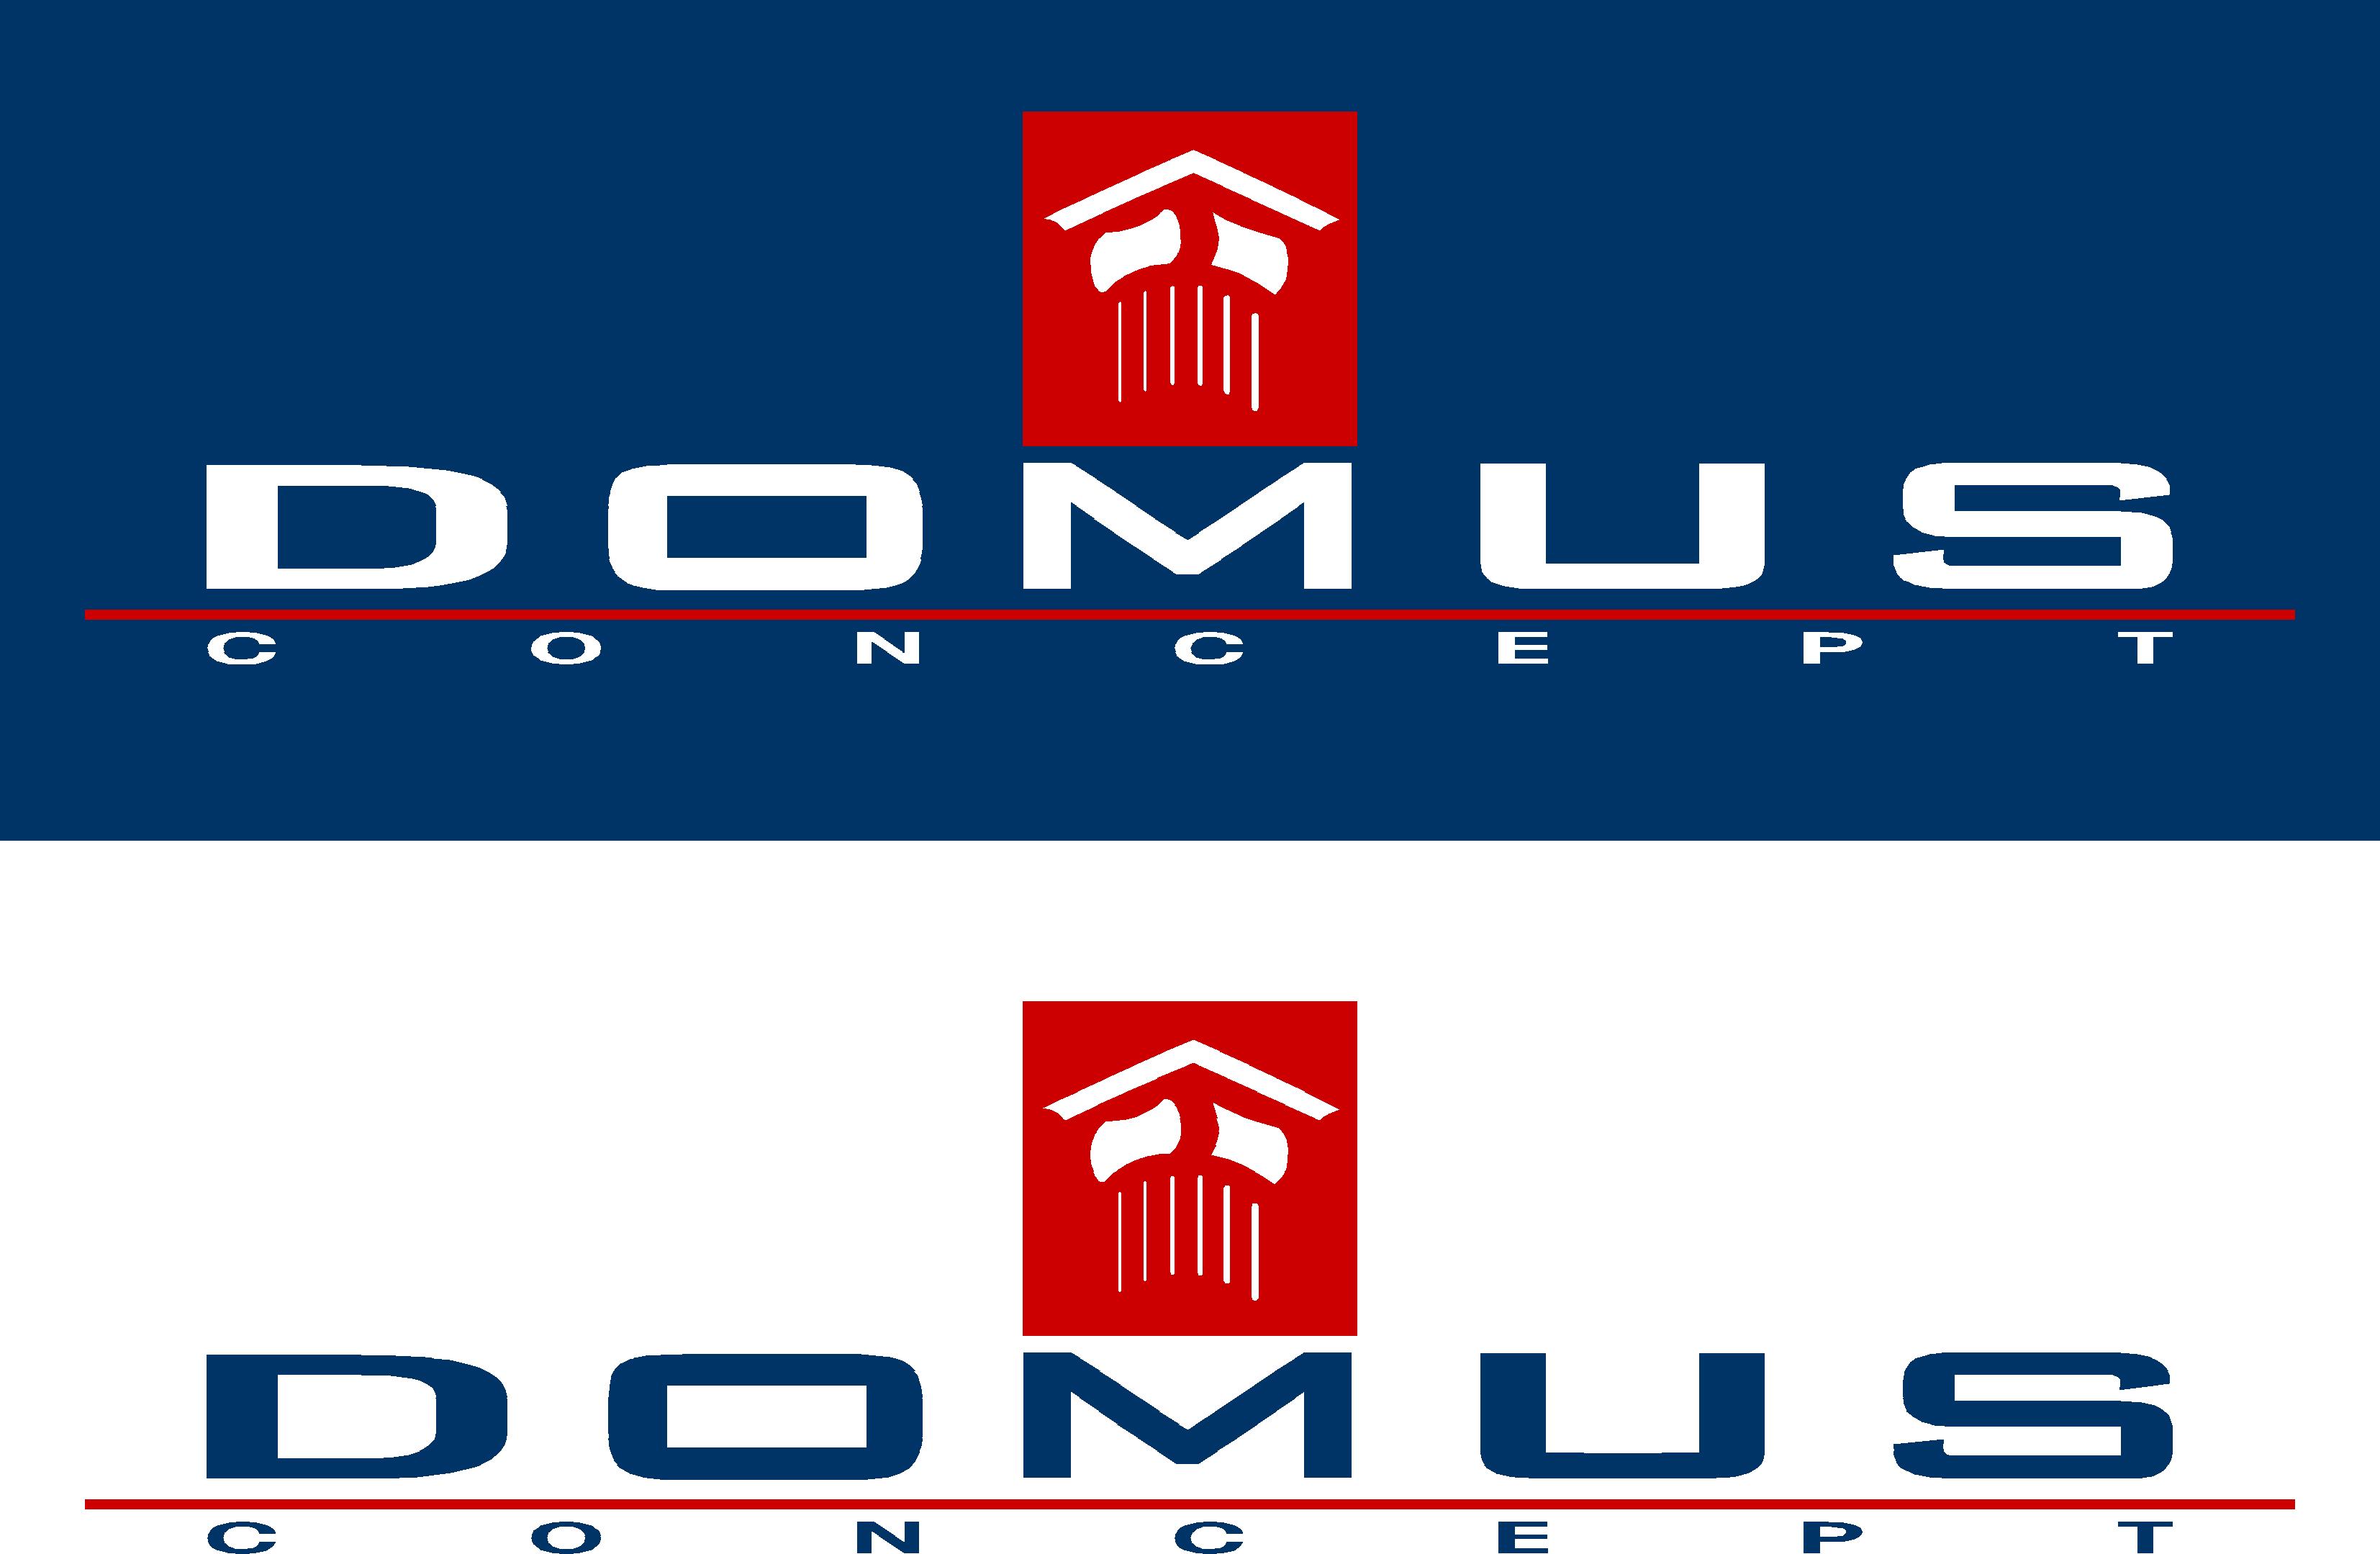 Logo Domus